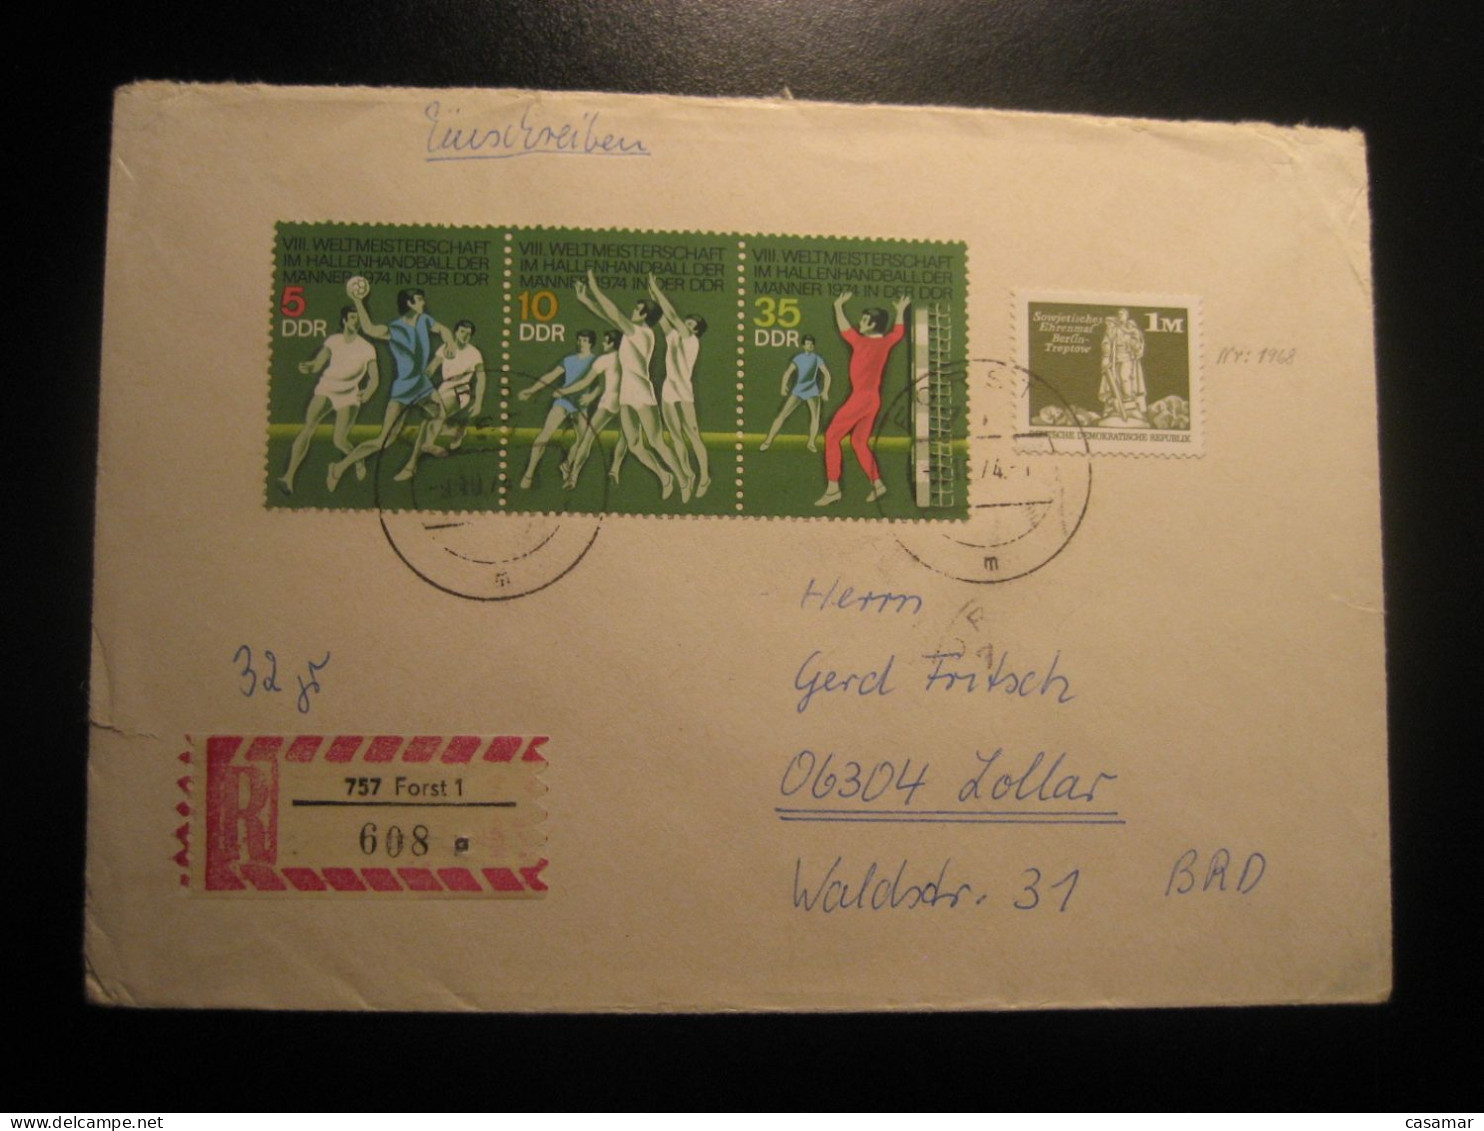 FORST 1974 Handball World Championship Balonmano Stamps On Registered Cover Tauschsendung ZKPH Label DDR GERMANY - Handbal